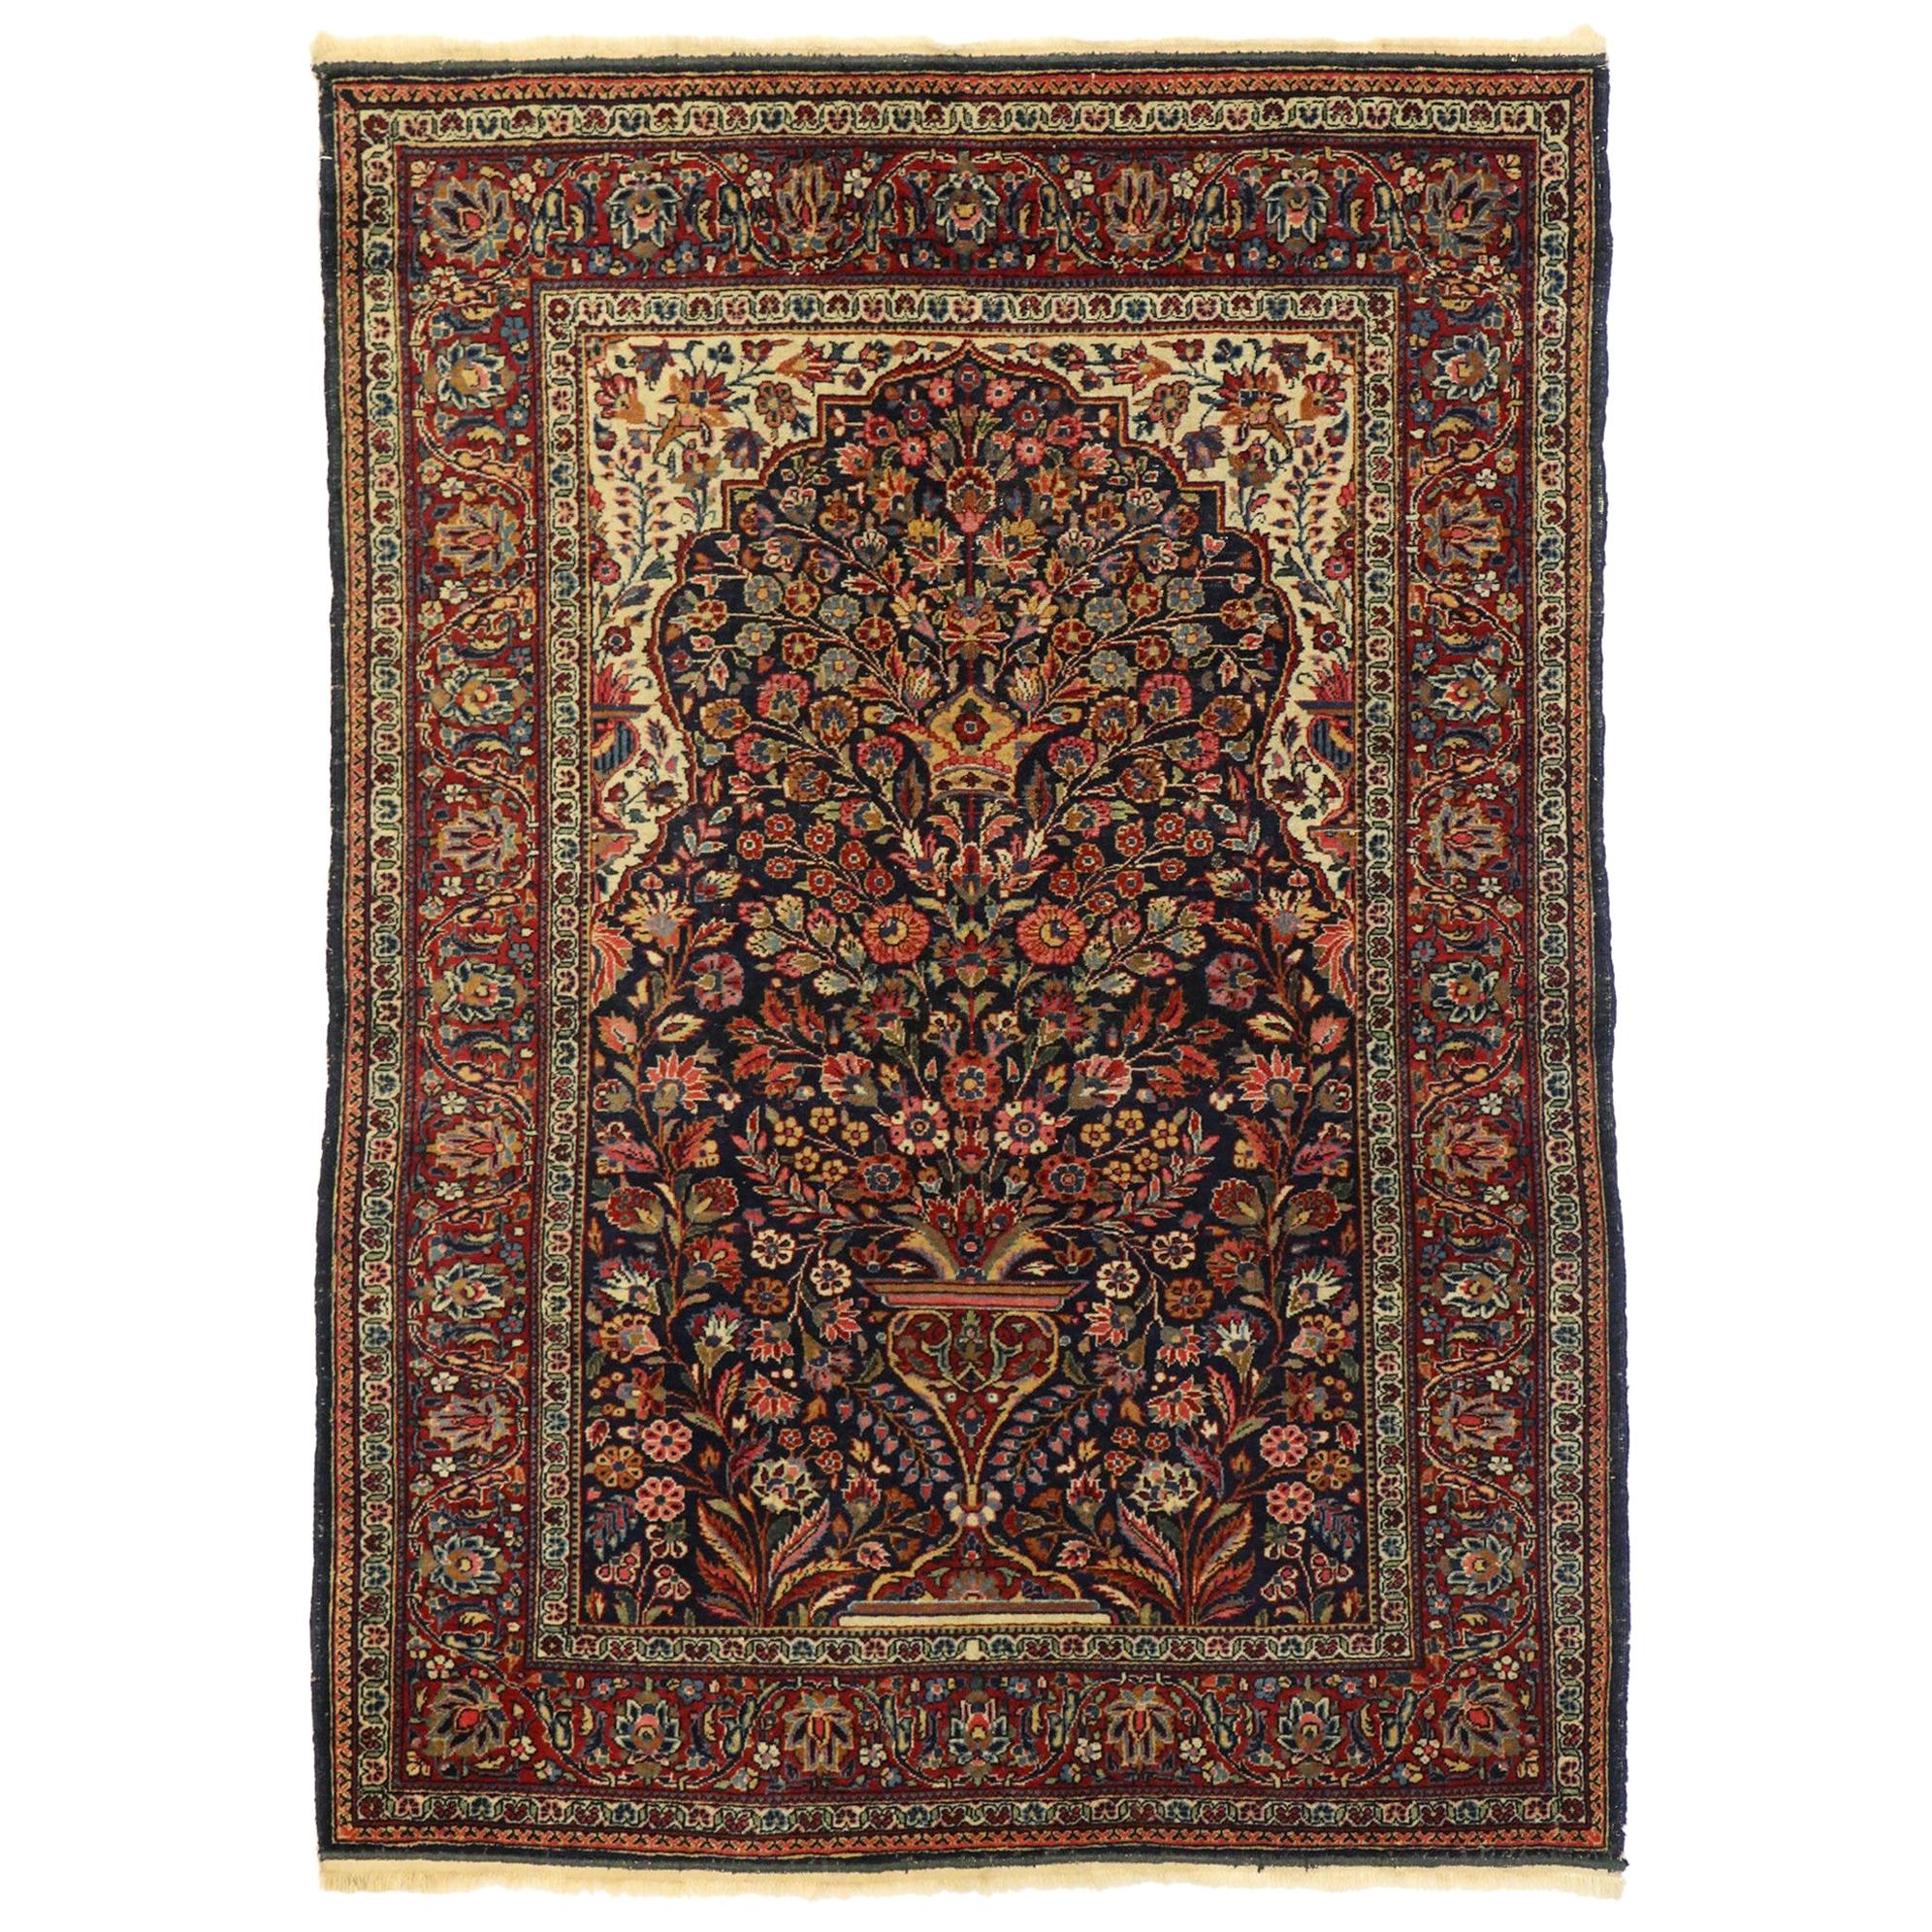 Antique Persian Kashan Vase Prayer Rug with Art Nouveau Style